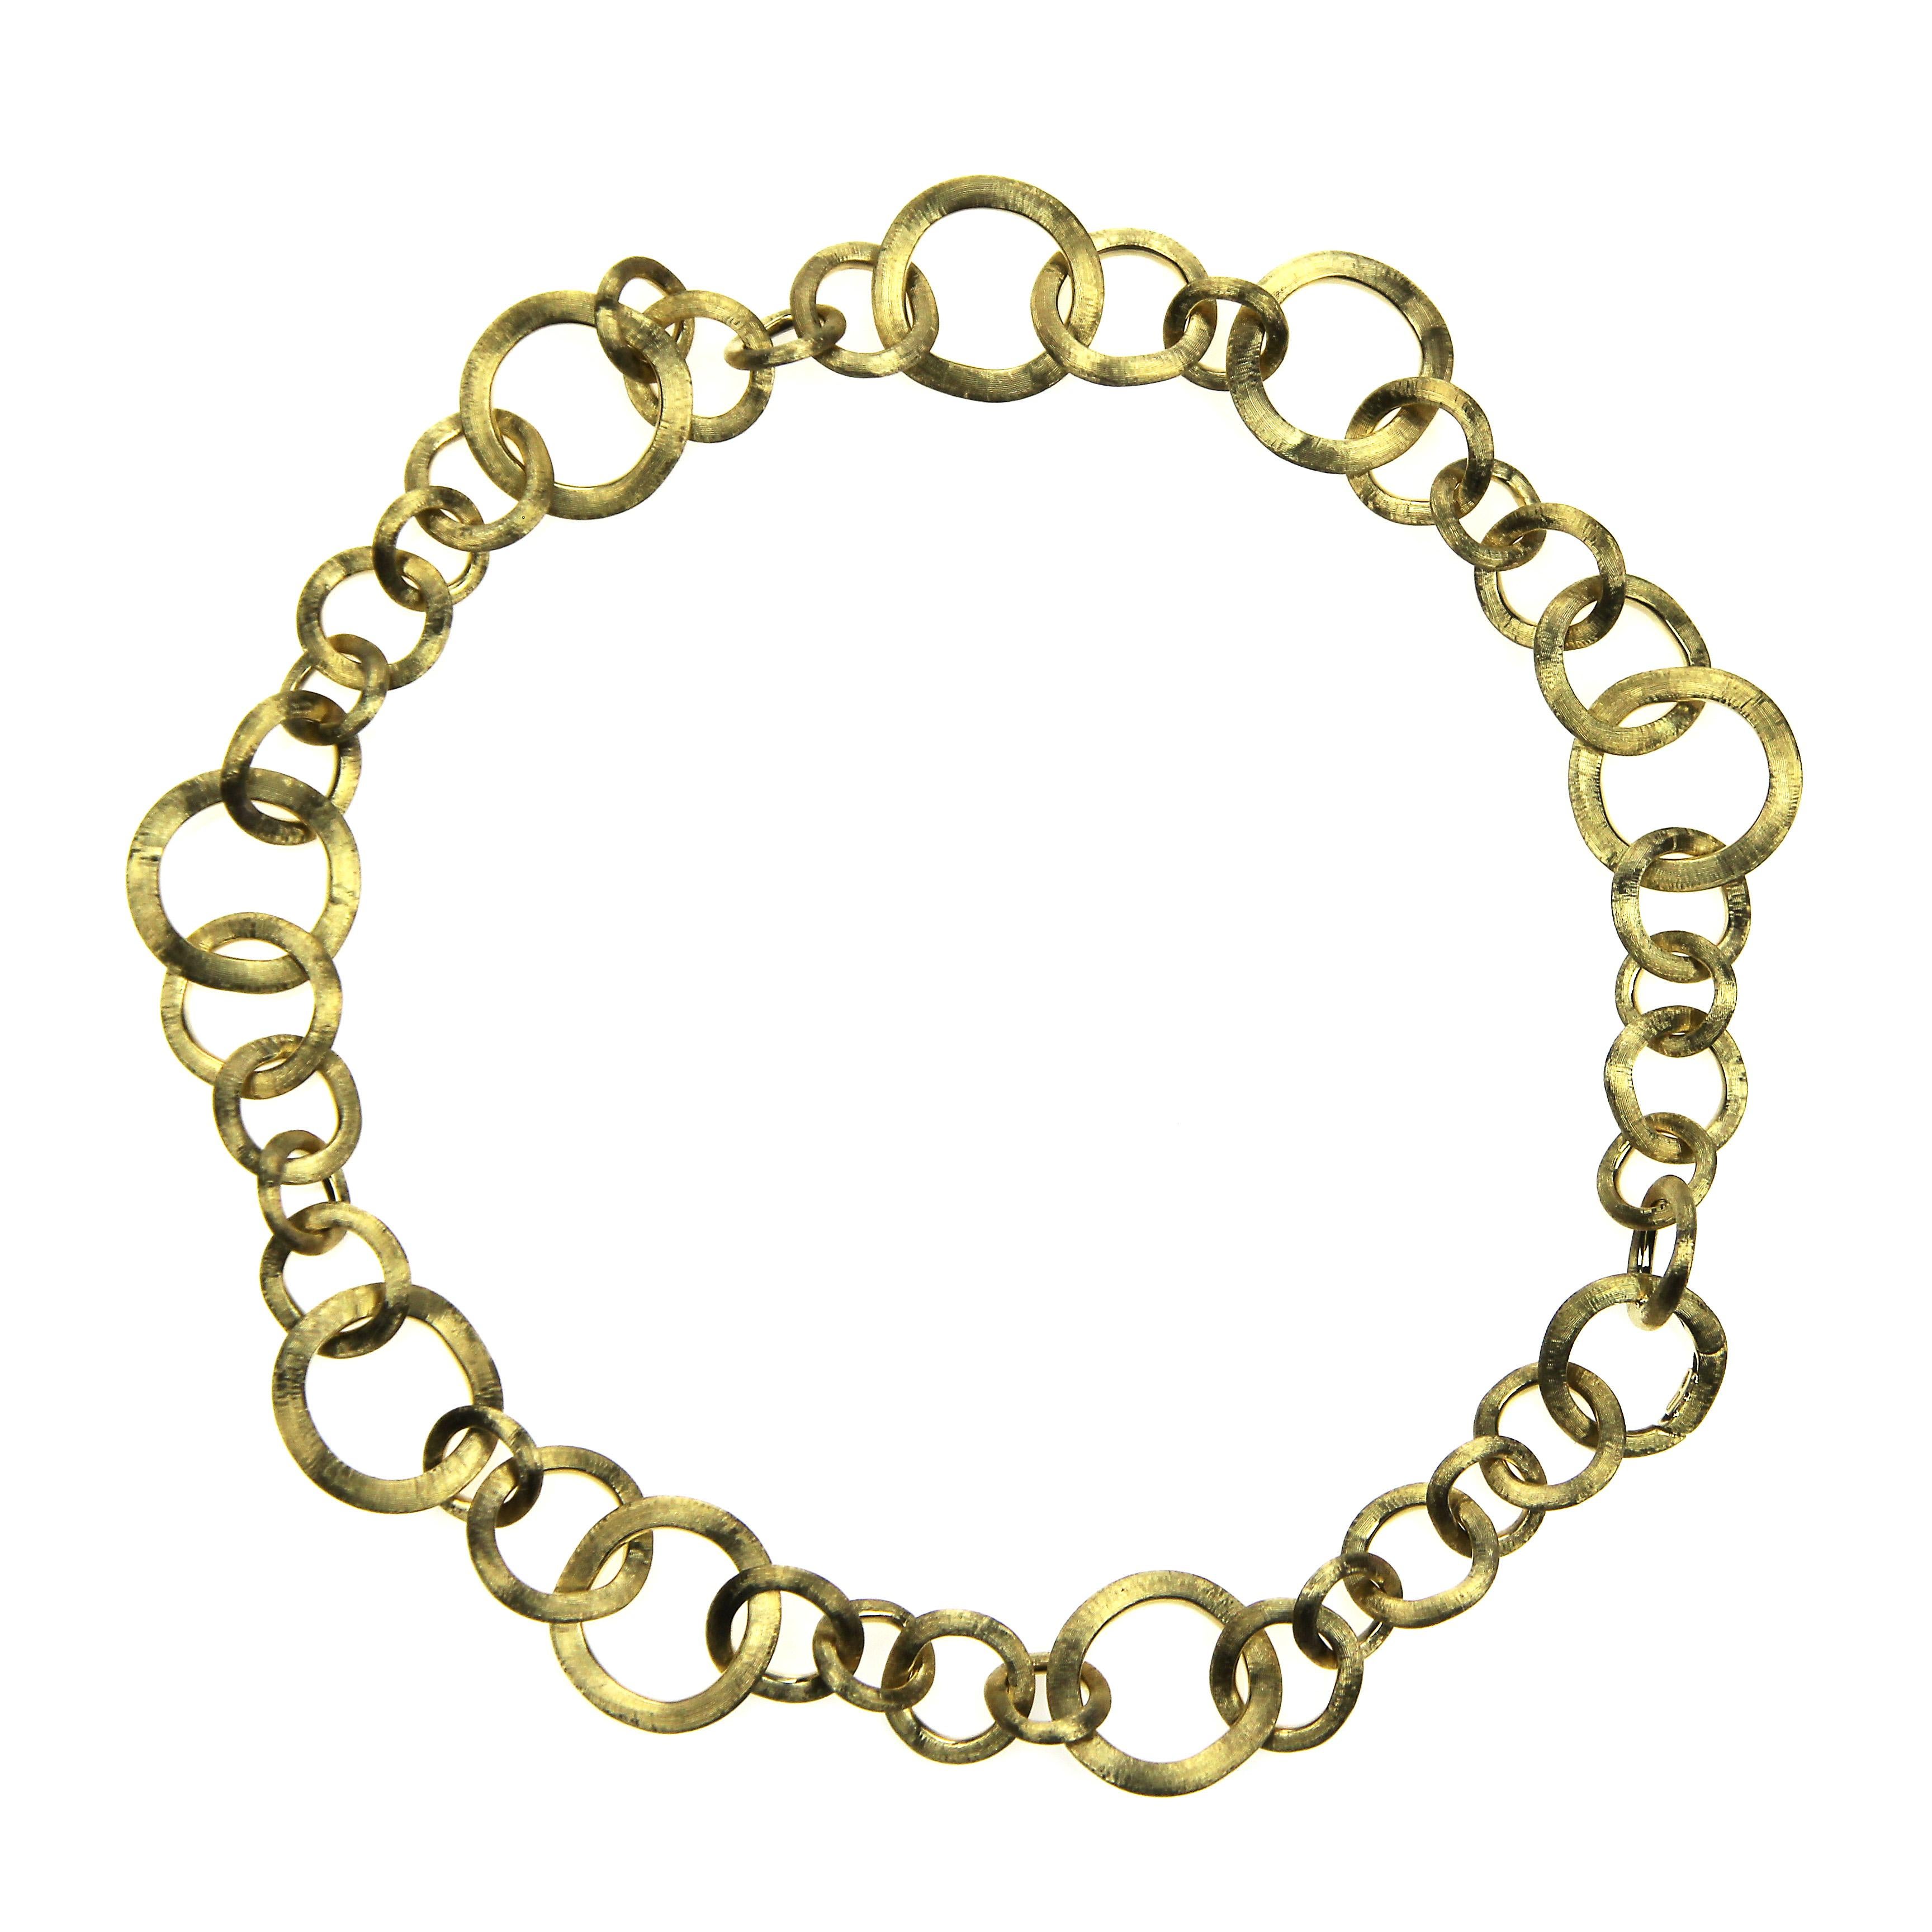 Marco Bicego 18 Karat Yellow Gold Jaipur Link Gauge Collar Choker Necklace